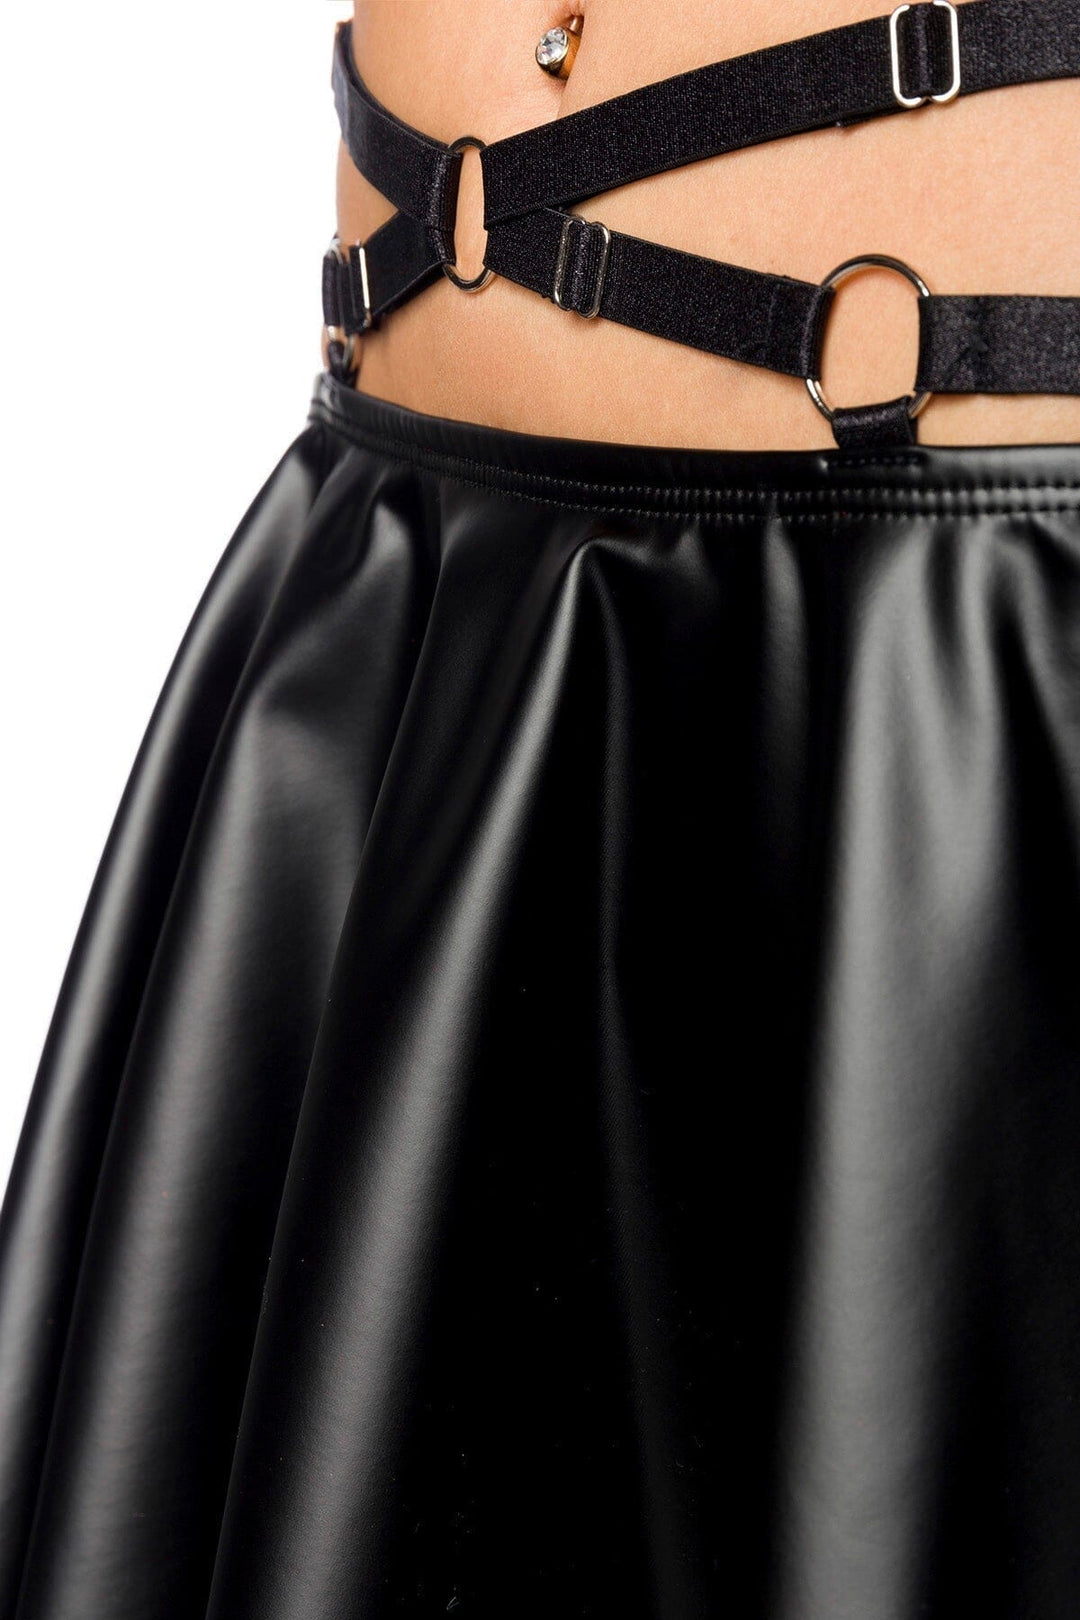 Multi-Strap Wetlook Crop Top & Flared Mini Skirt Set-Fetish Sets-Saresia-SEXYSHOES.COM